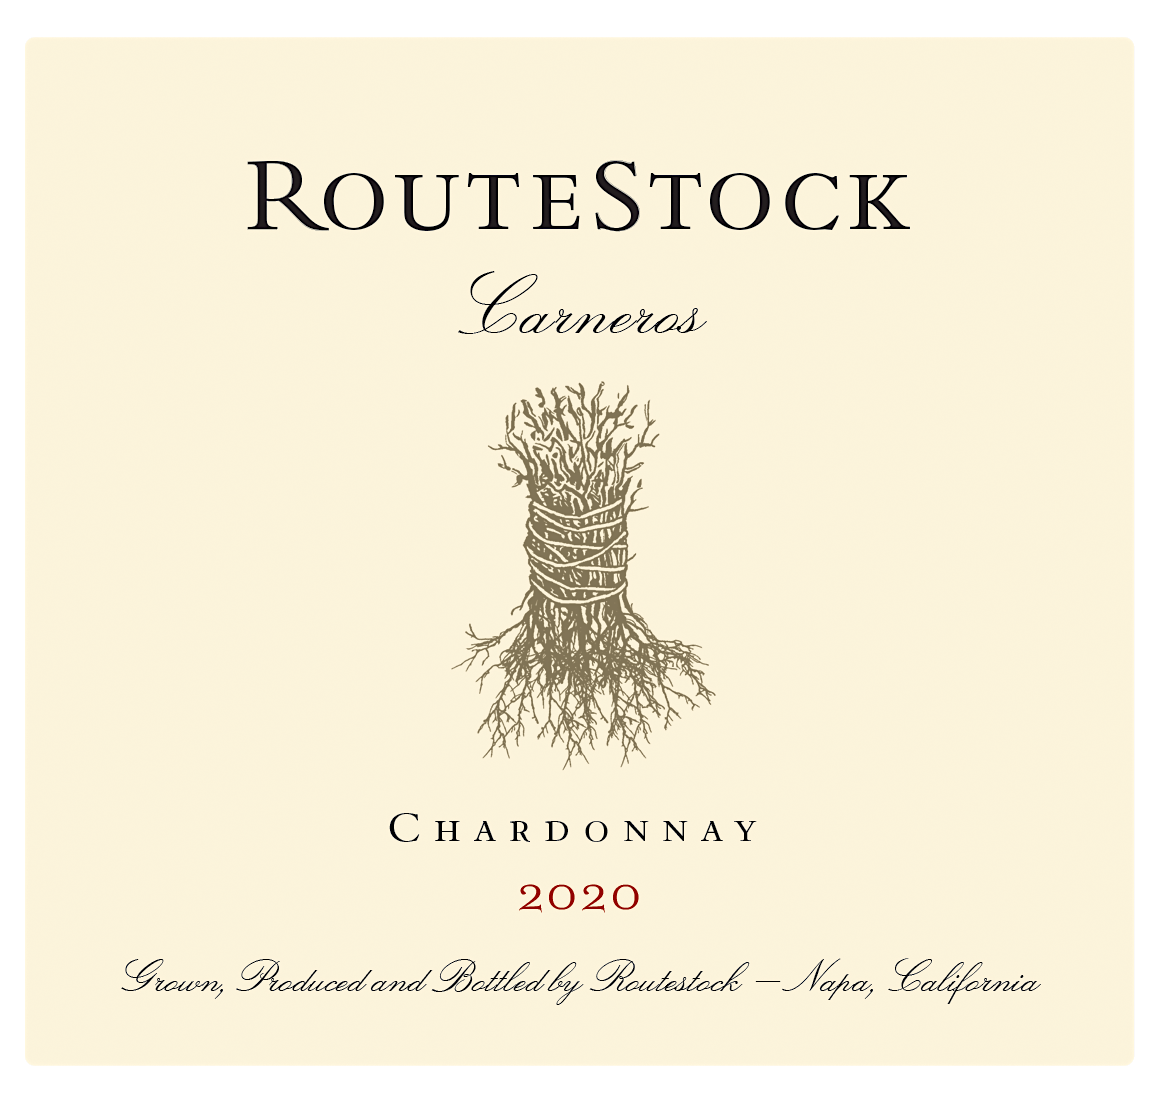 Label for RouteStock